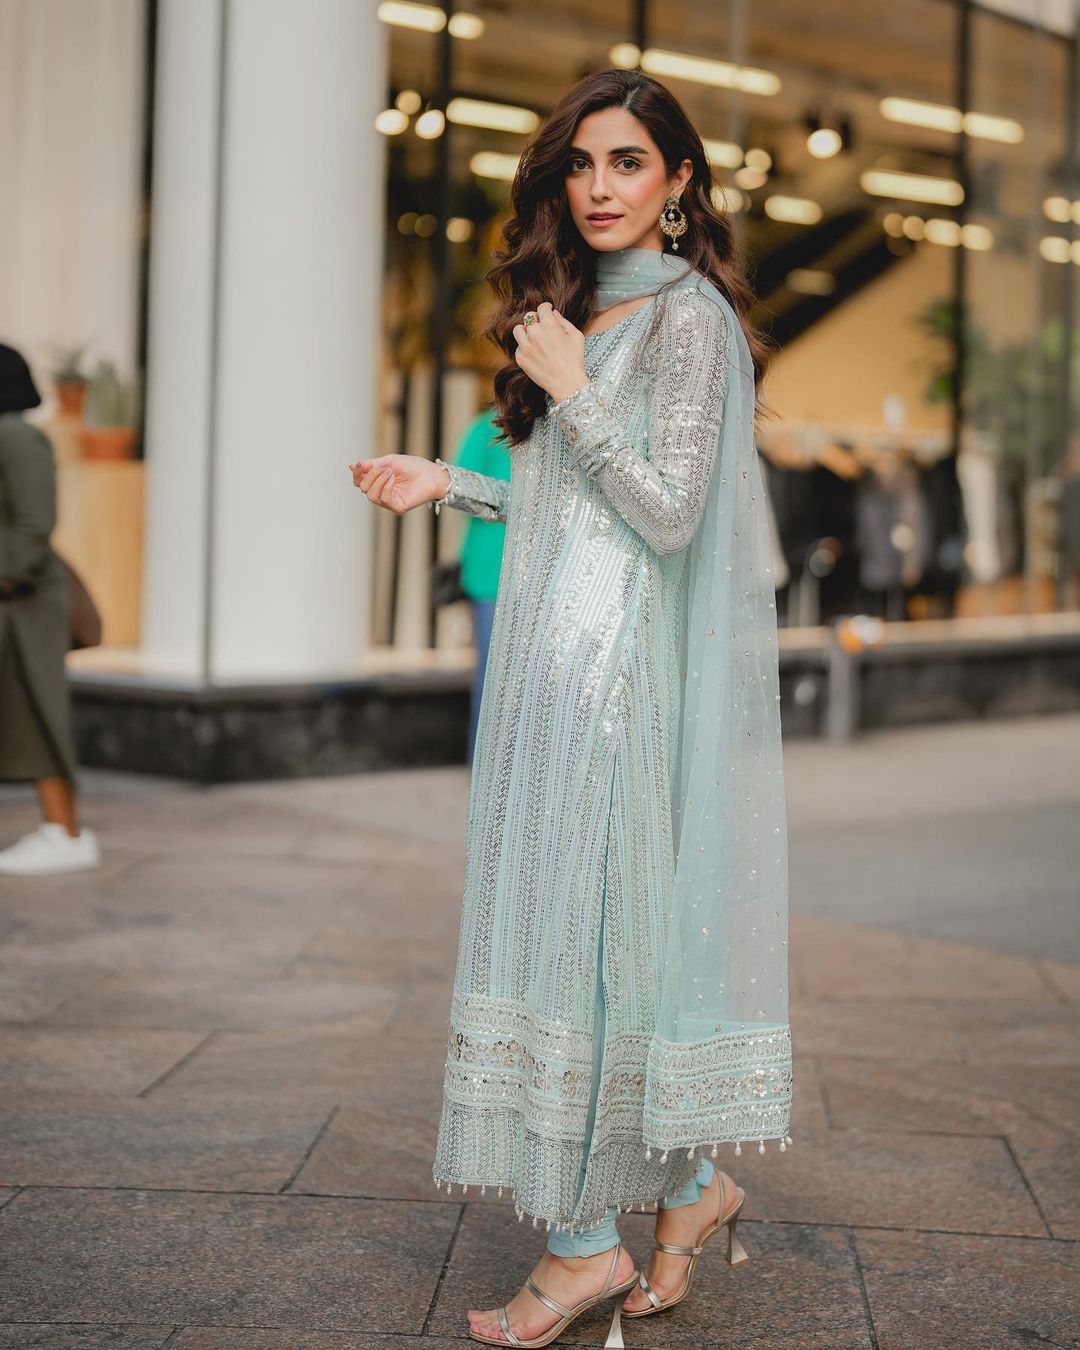 Maya Ali Shines Like a Diamond In Shimmery Ice Blue Ethnic Wear - Lens